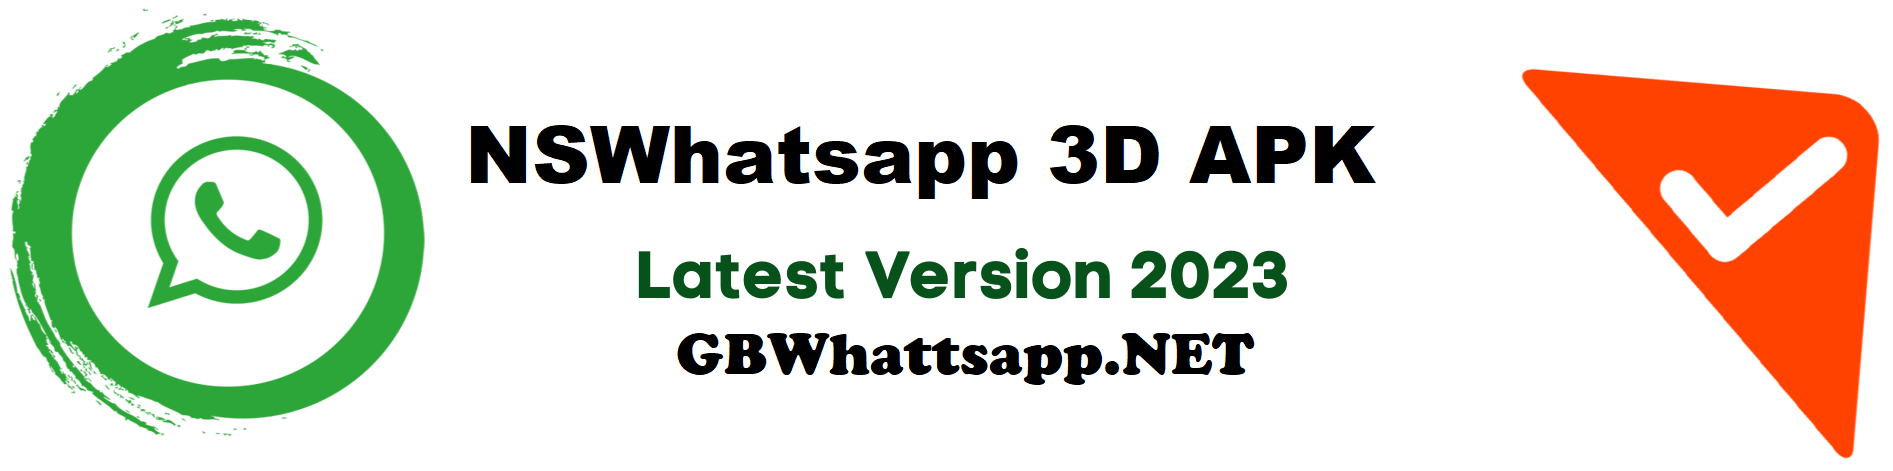 NSWhatsapp 3D APK